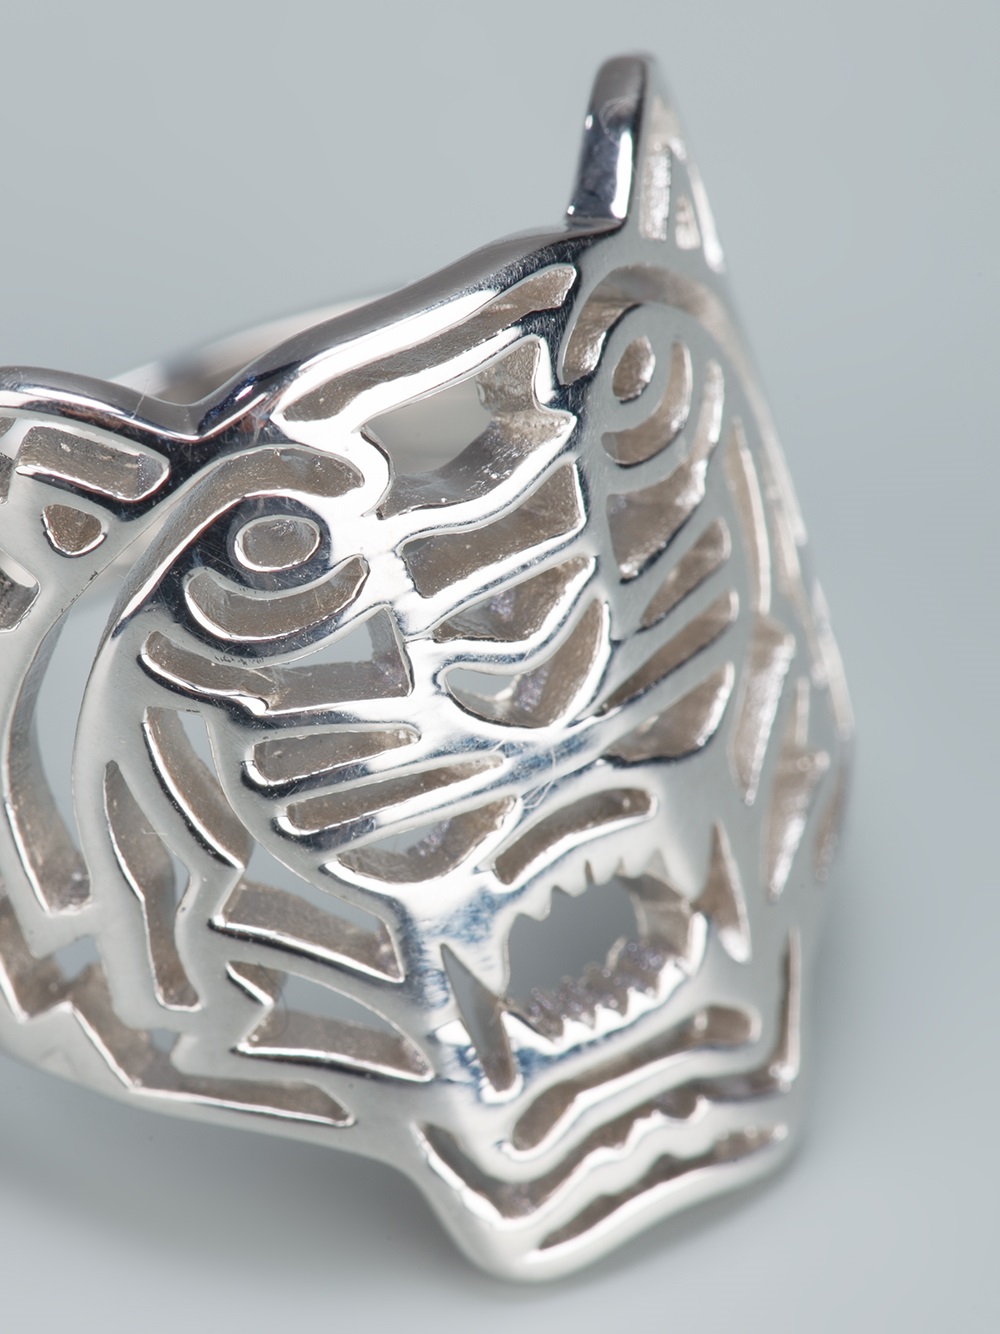 kenzo tiger ring silver